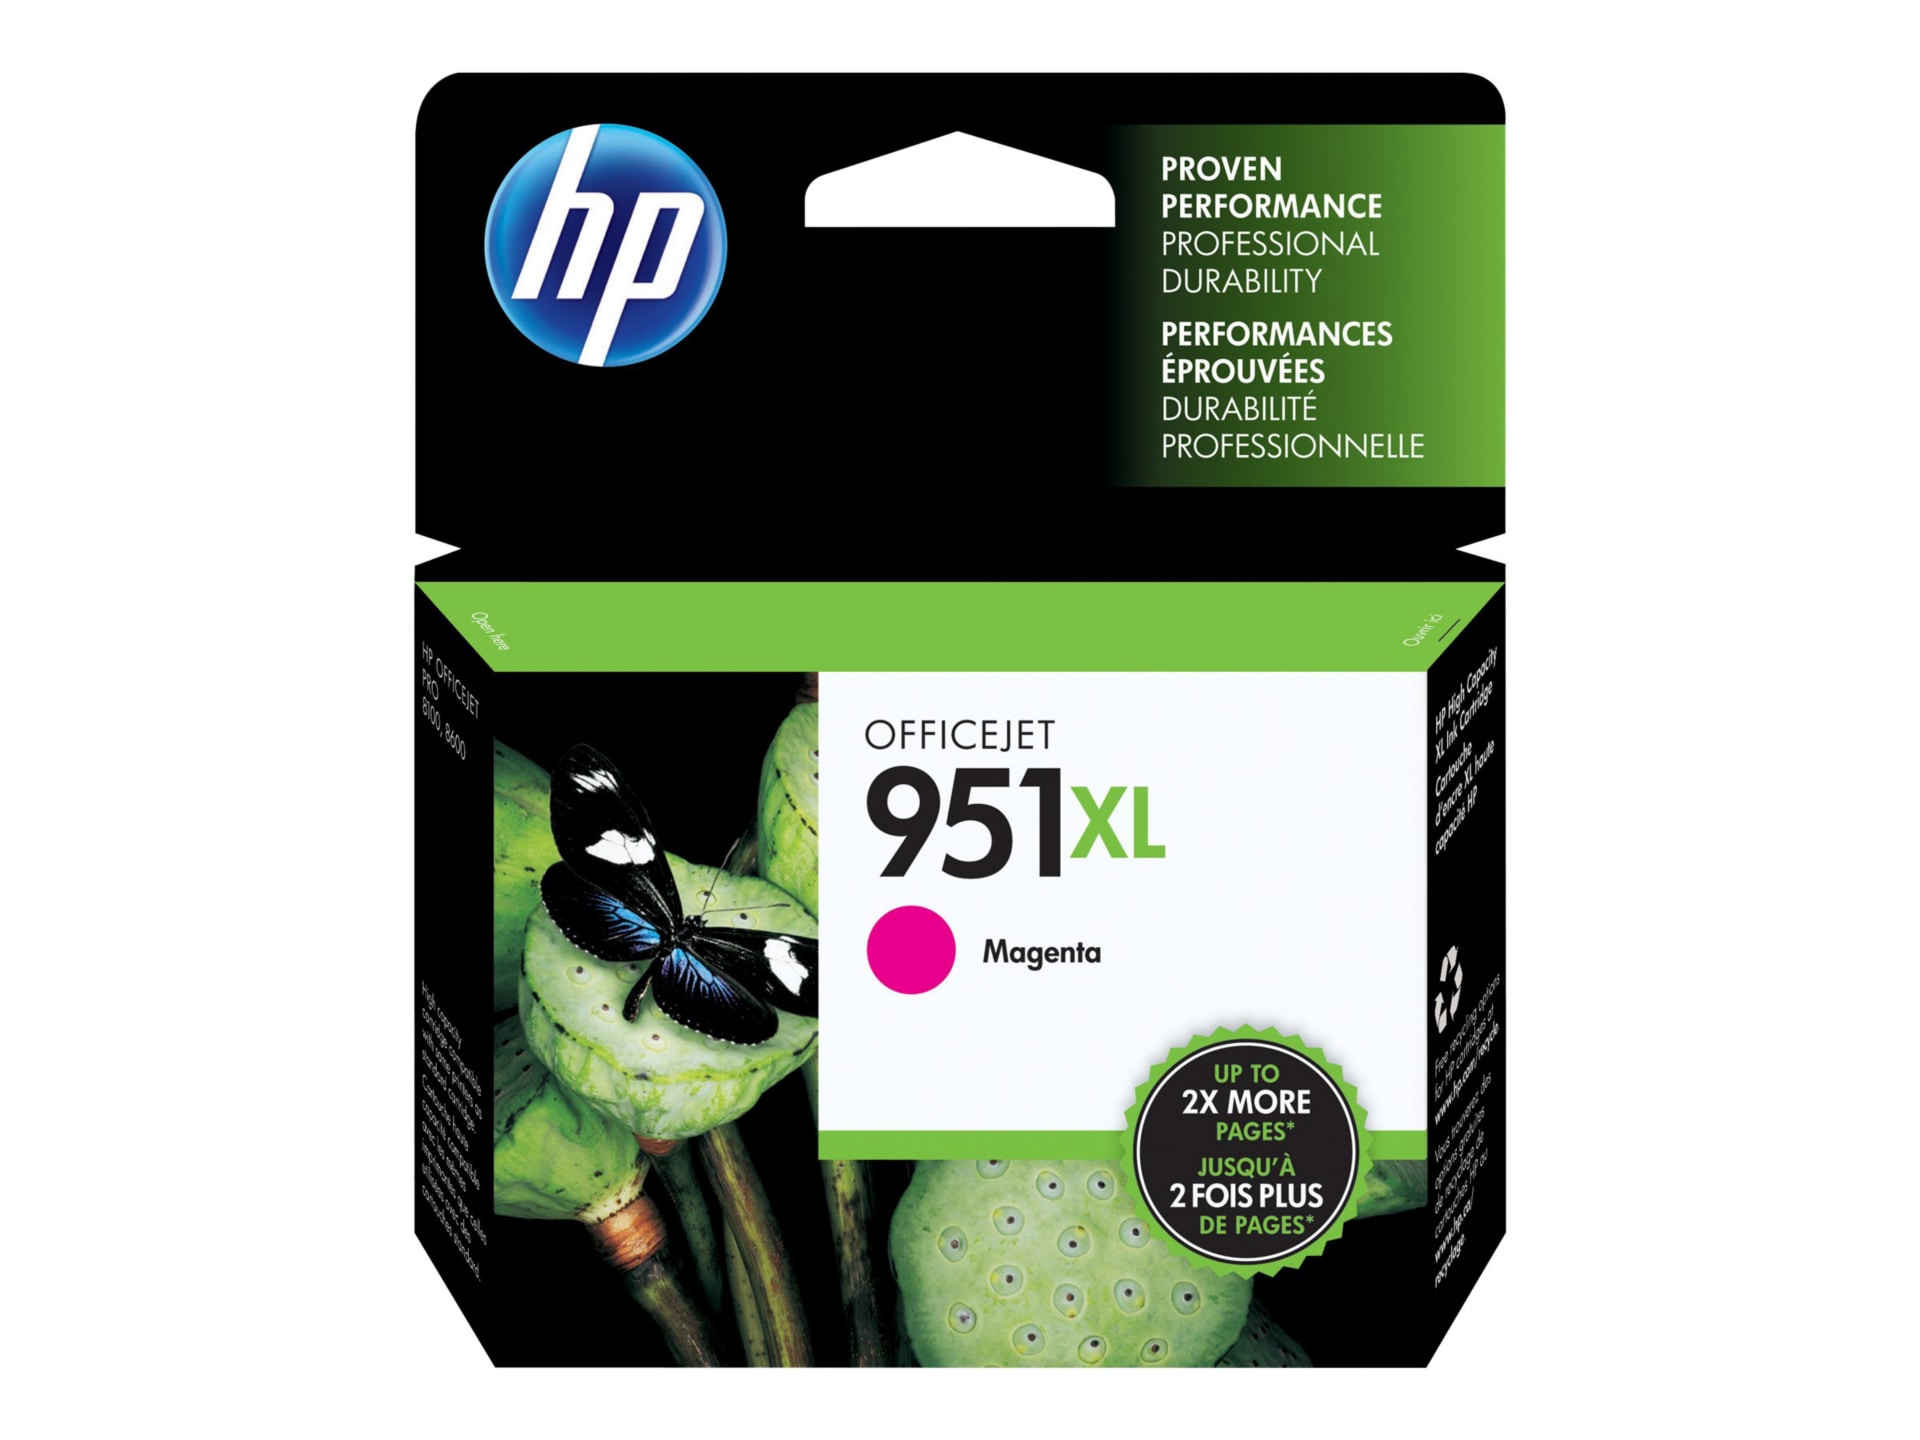 HP 951XL Original Inkjet Ink Cartridge - Magenta Pack